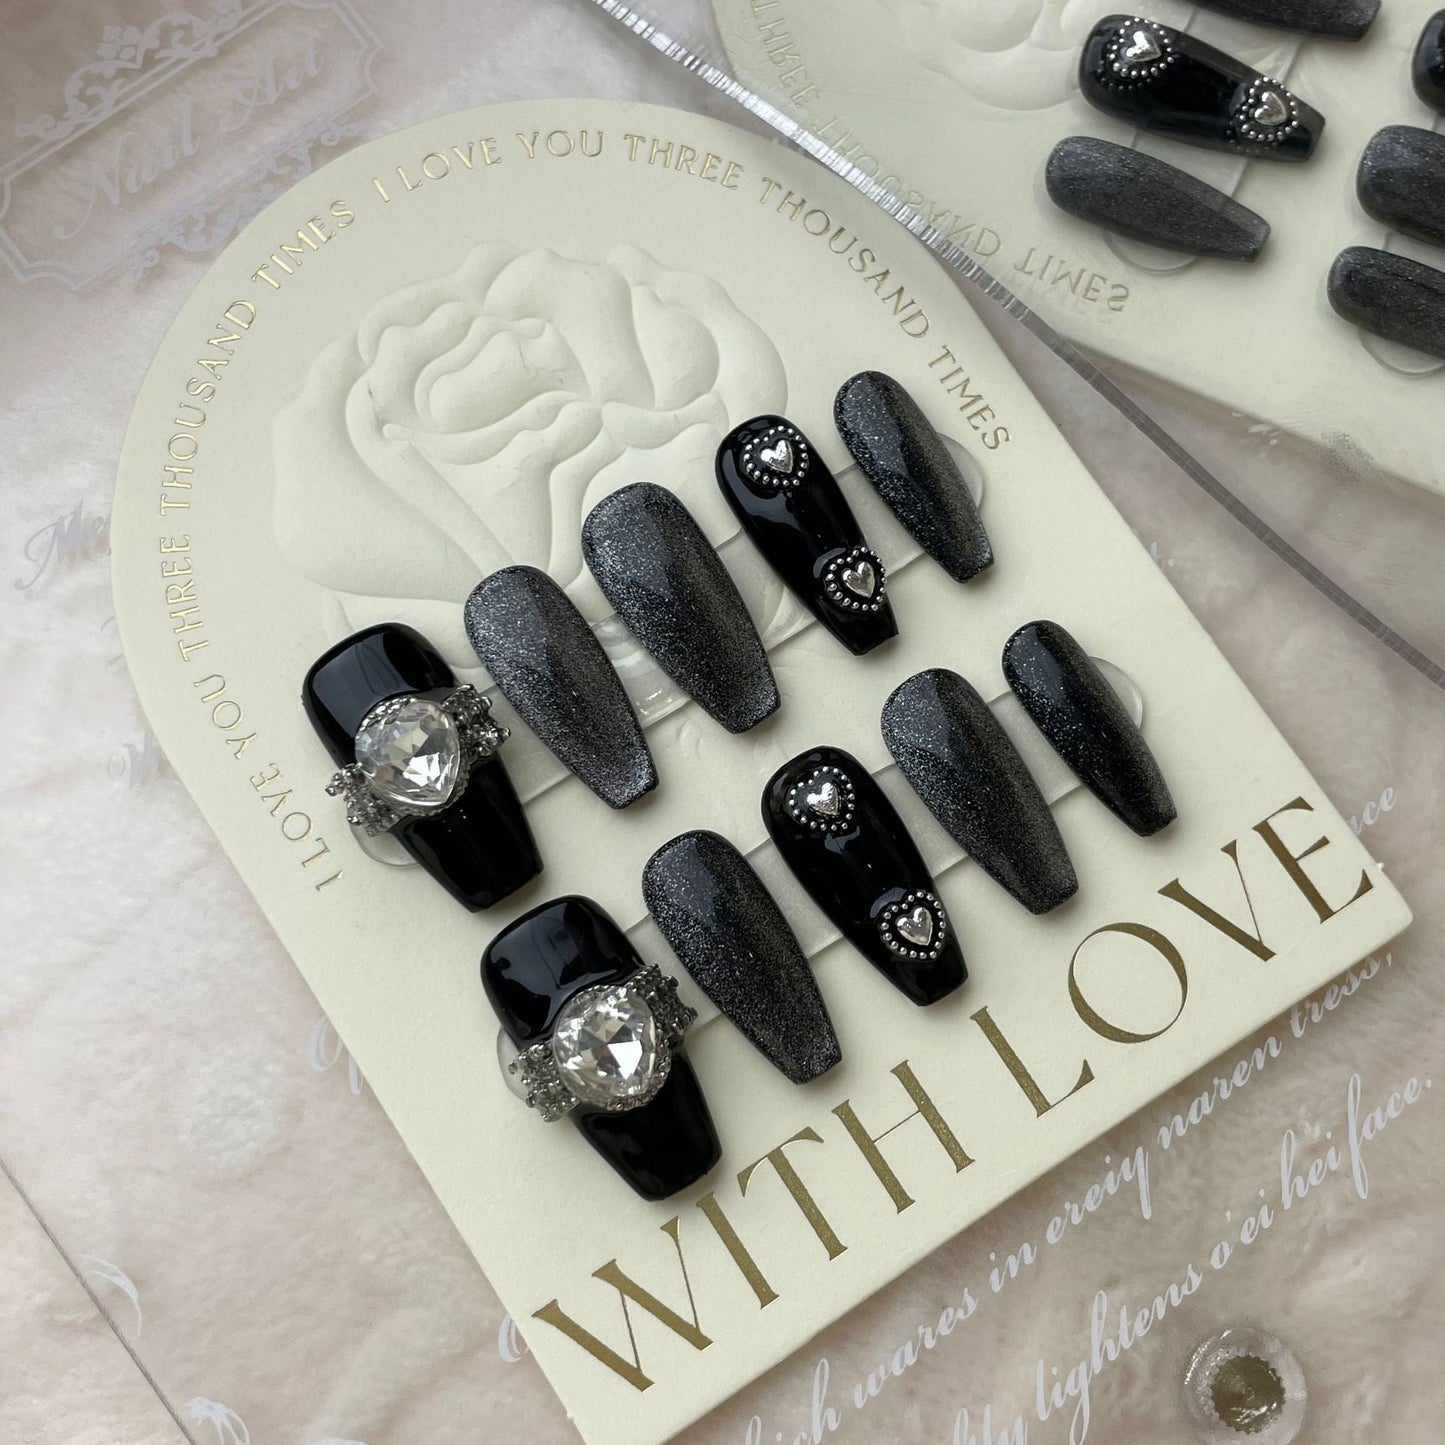 603/604 Zwart Cateye-effect press-on-nagels 100% handgemaakte kunstnagels zwart zilver